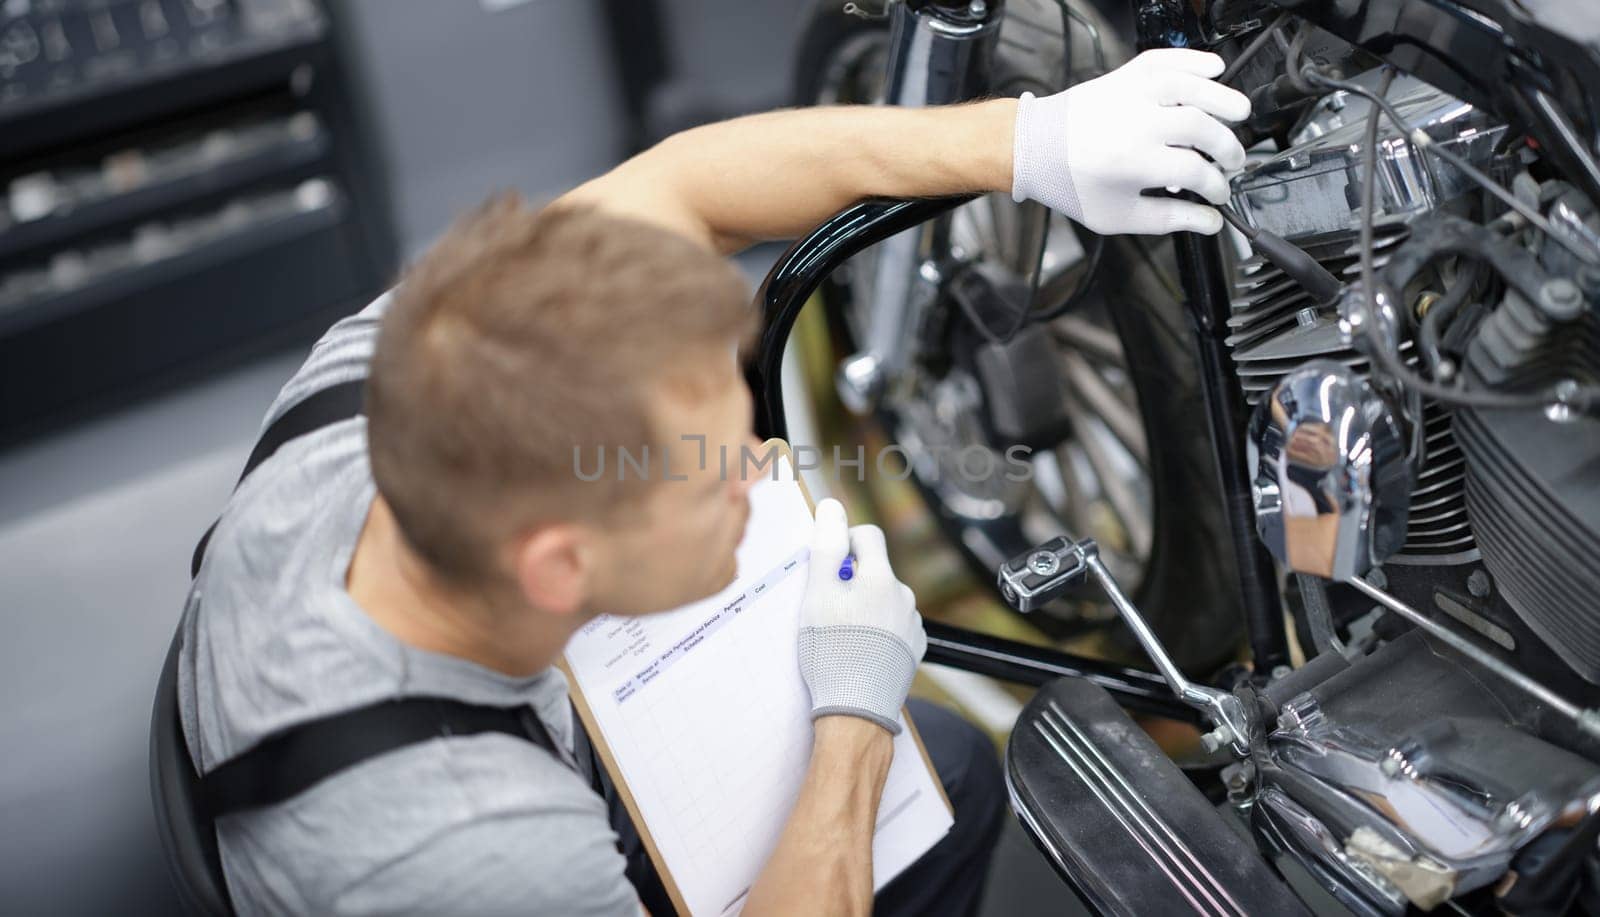 Car mechanic inspects motorcycle breakdowns in car repair shop by kuprevich